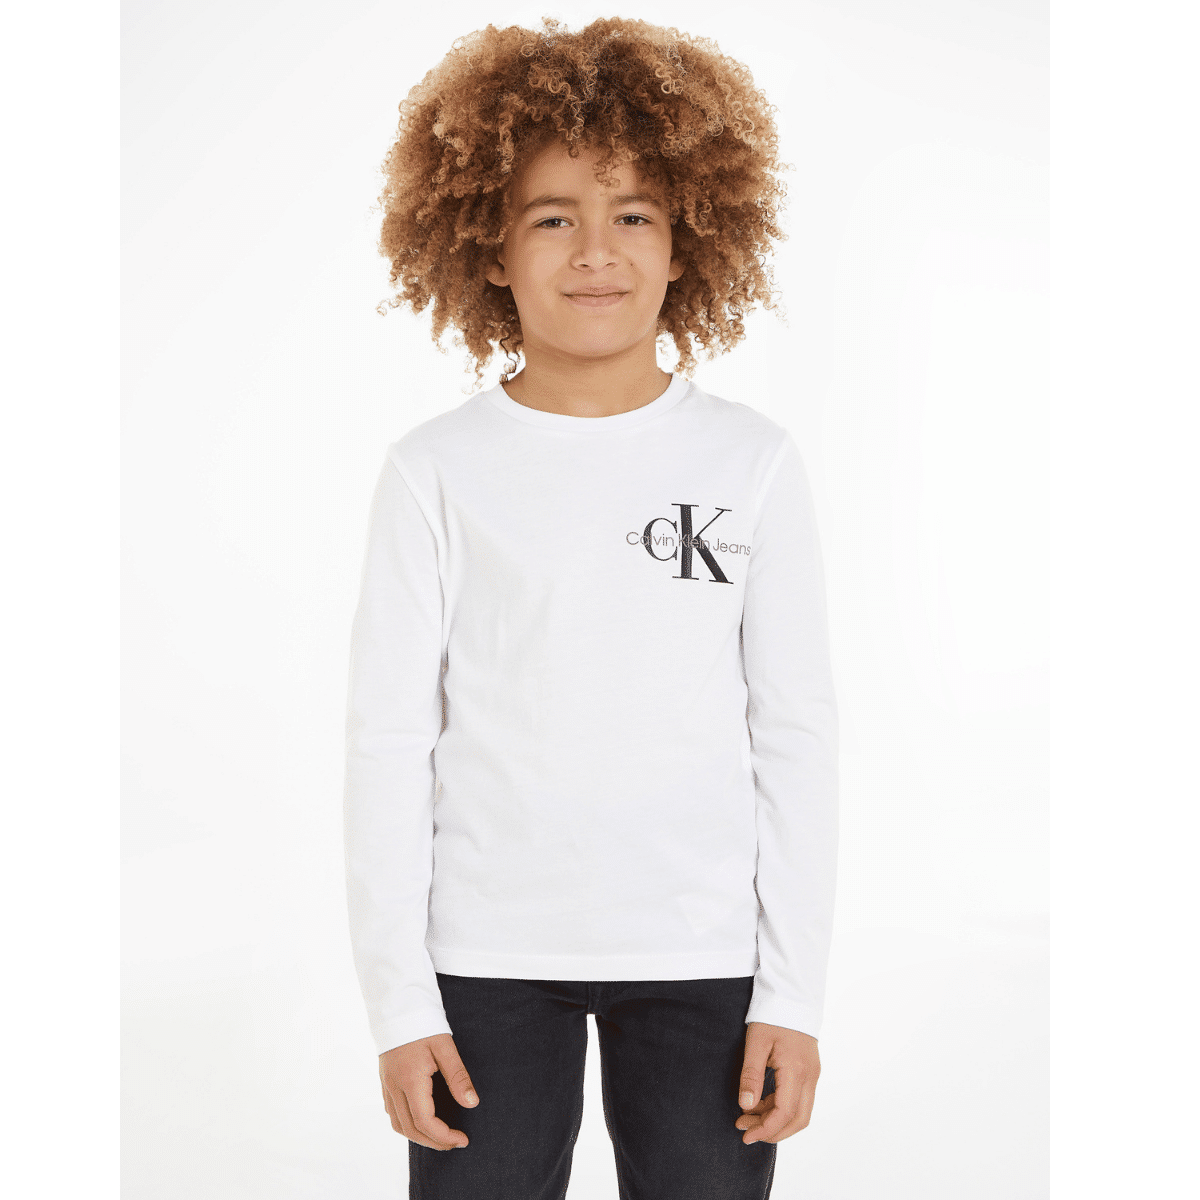 calvin klein childrens white long sleeved top with black logo on model